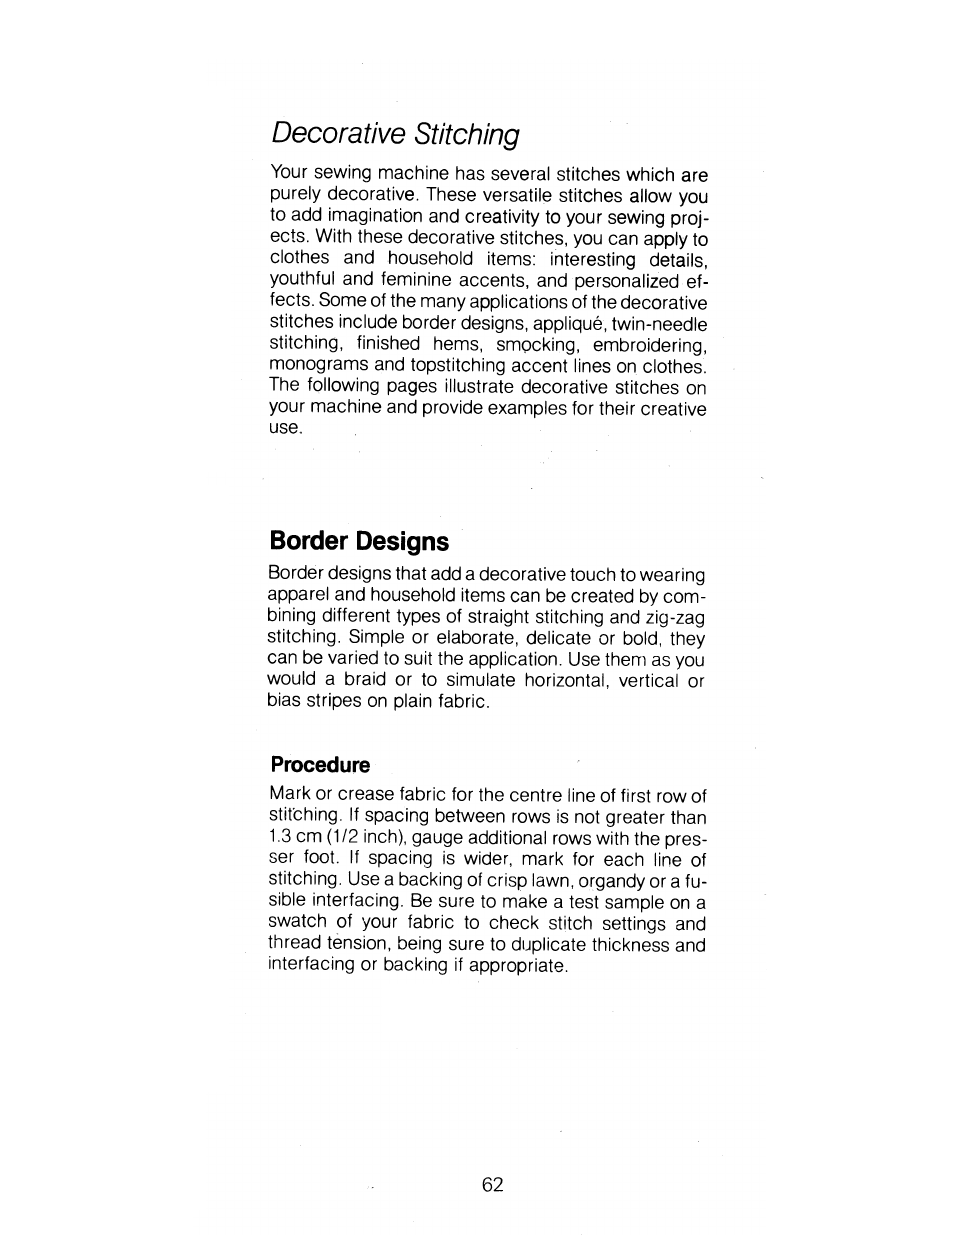 Decorative stitching, Border designs, Procedure | SINGER 1288 User Manual | Page 63 / 89